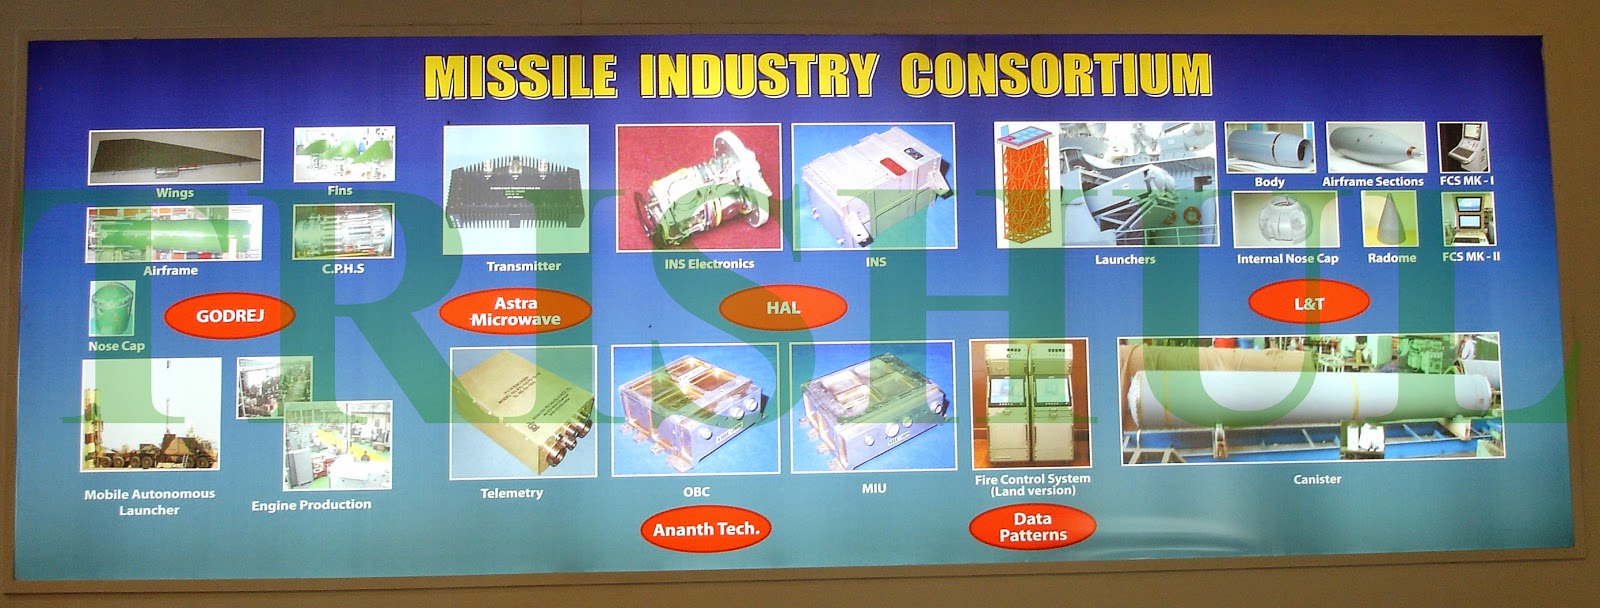 BrahMos Industrial Consortium-1.jpg